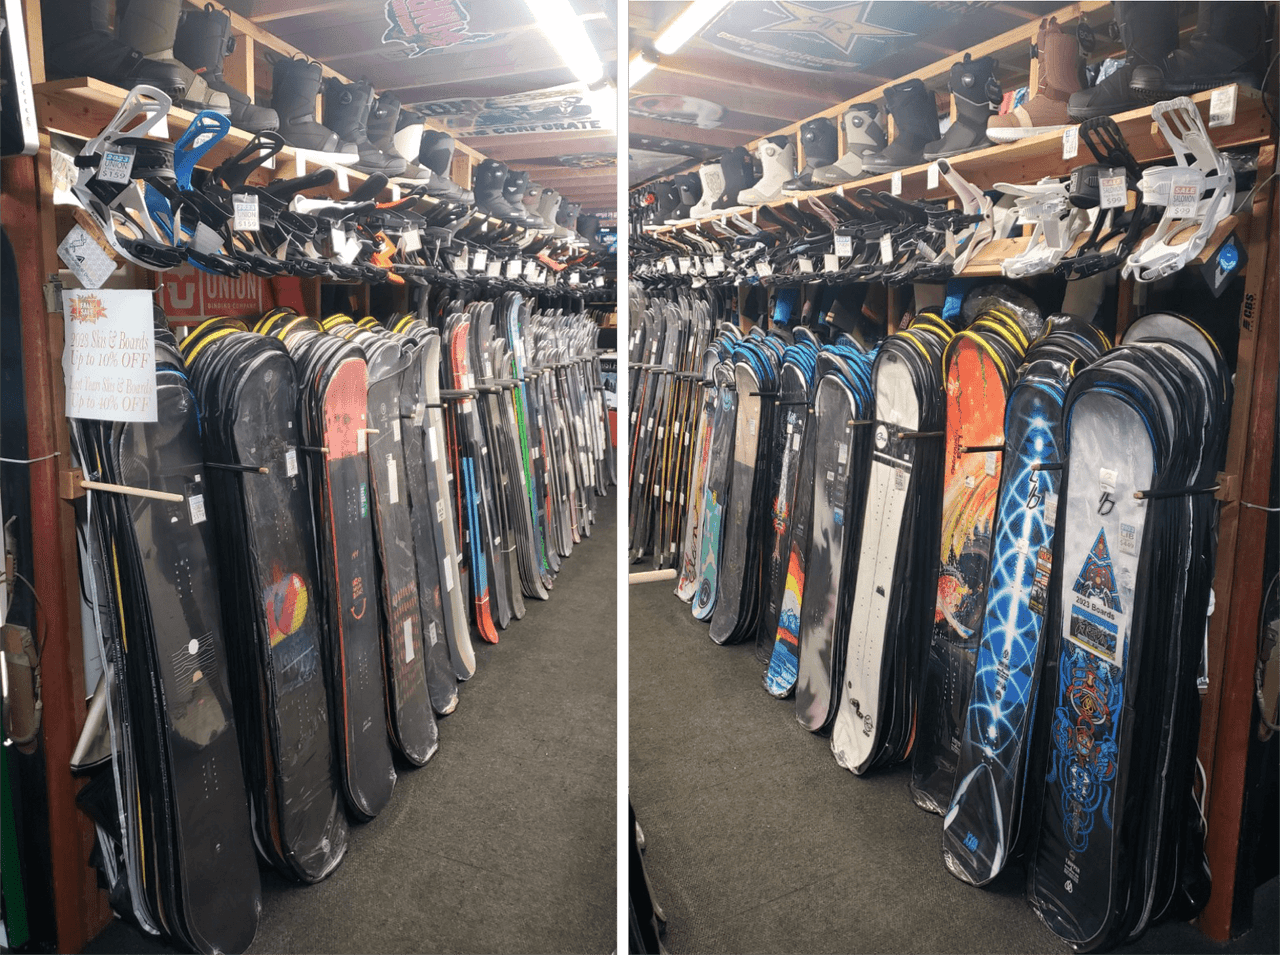 CBS Boardshop Ski and Snowboard Since 1989